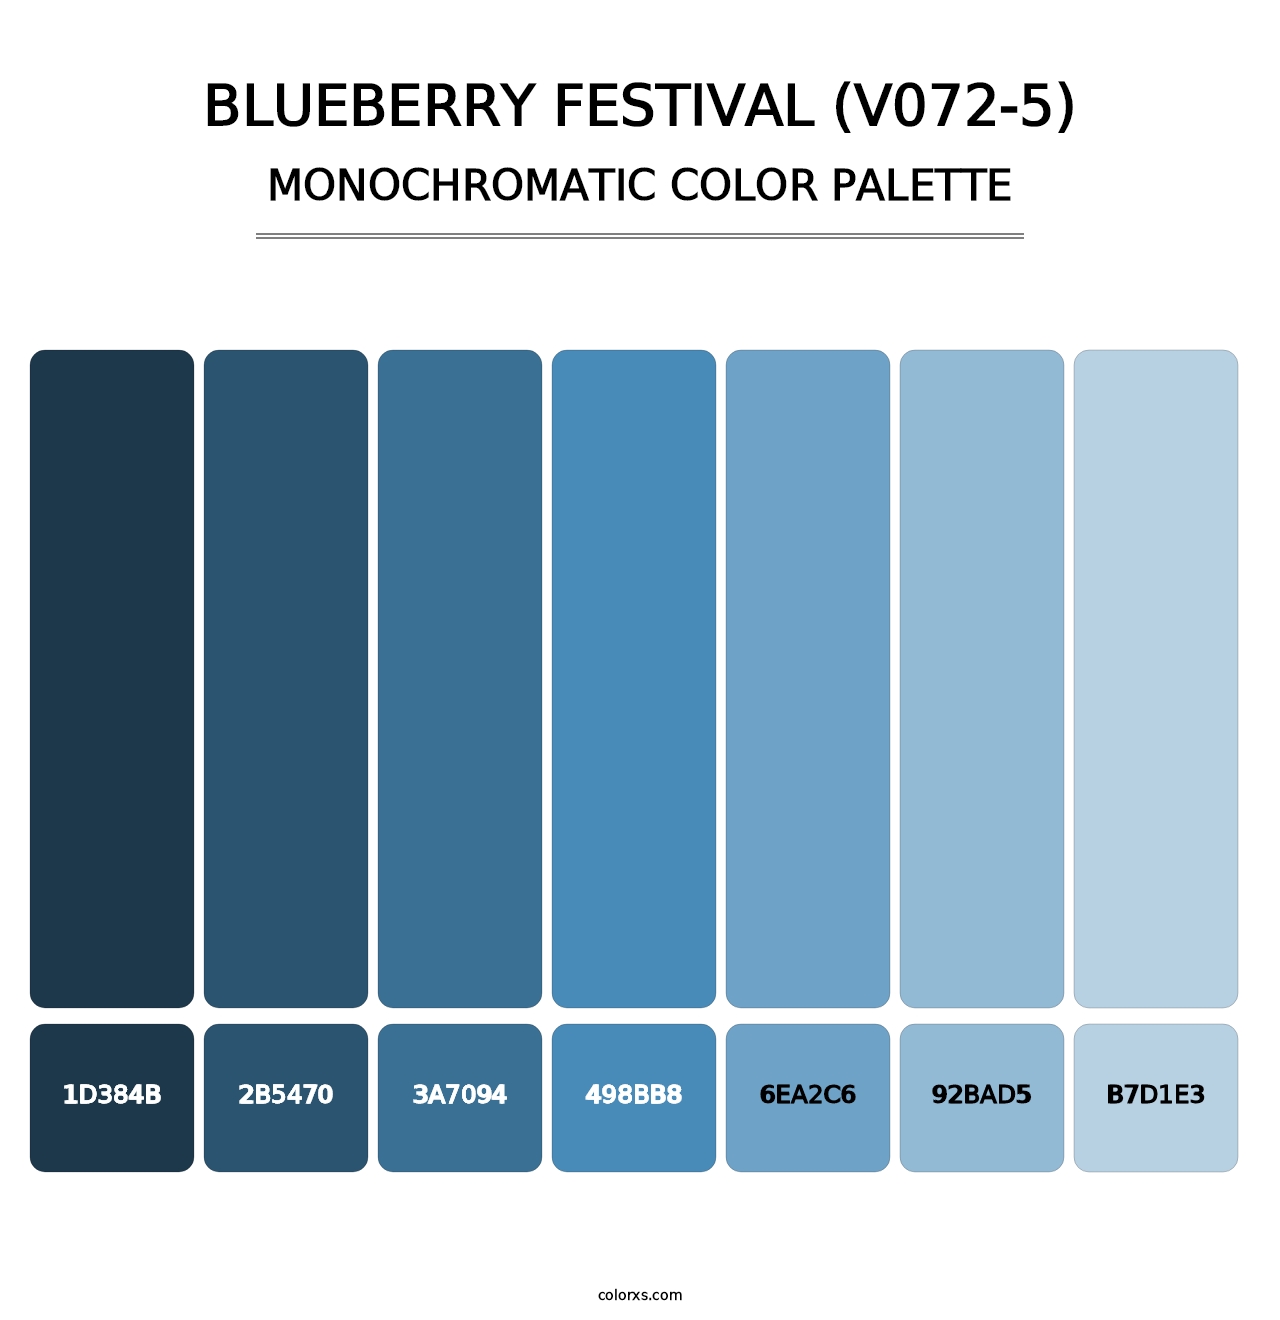 Blueberry Festival (V072-5) - Monochromatic Color Palette